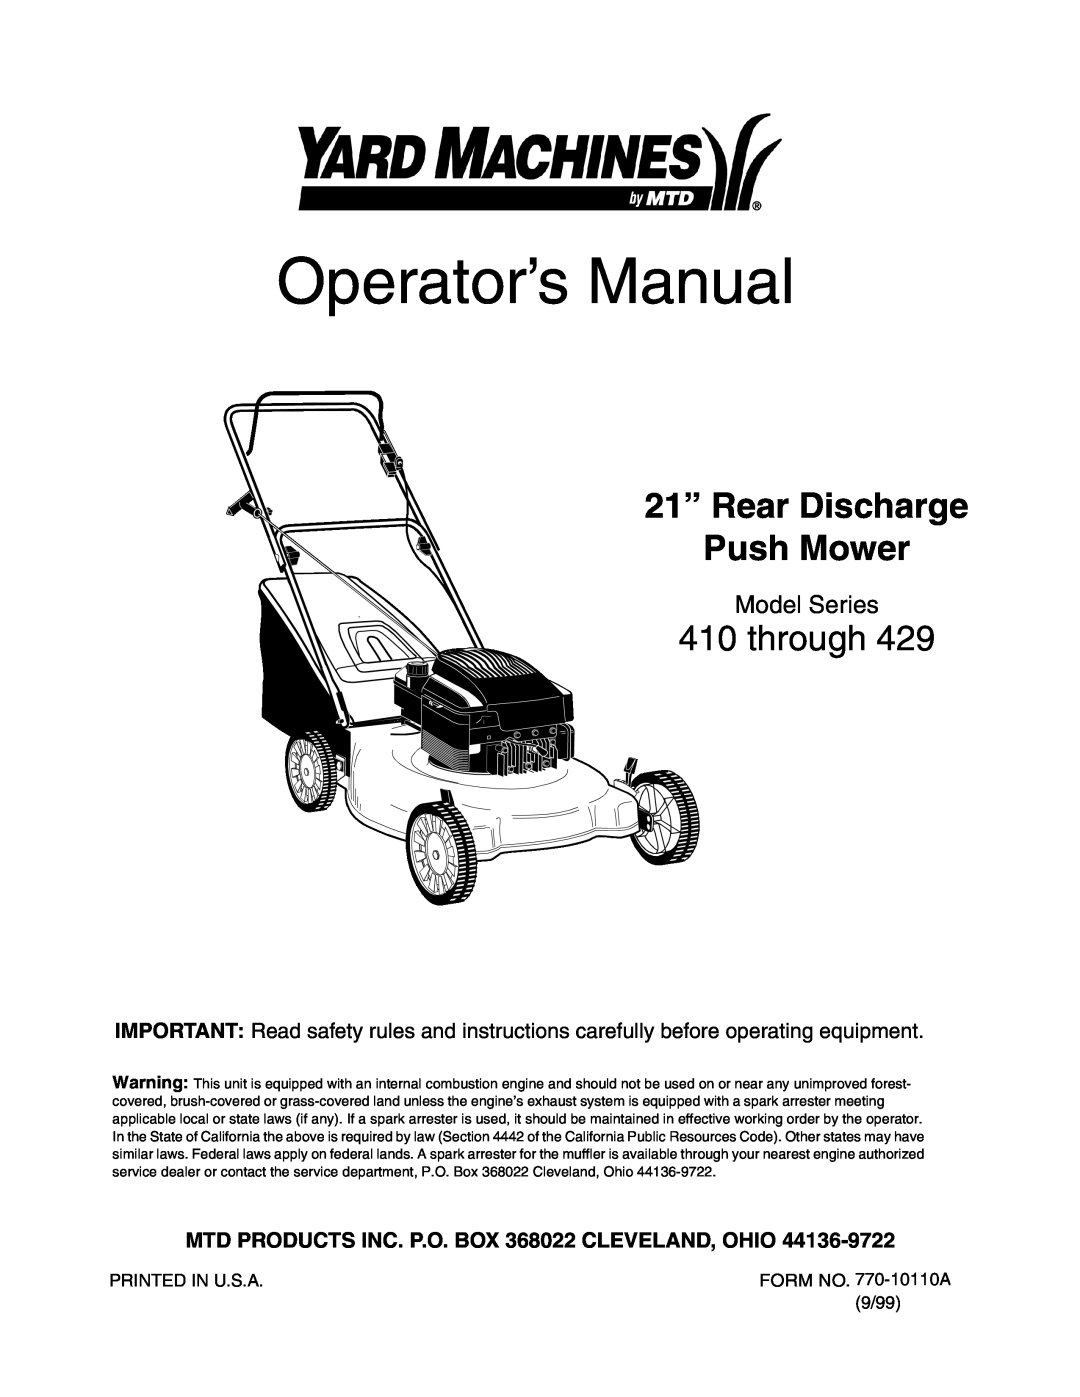 Yard Machines through 429, 410 manual MTD PRODUCTS INC. P.O. BOX 368022 CLEVELAND, OHIO, Operator’s Manual, Model Series 